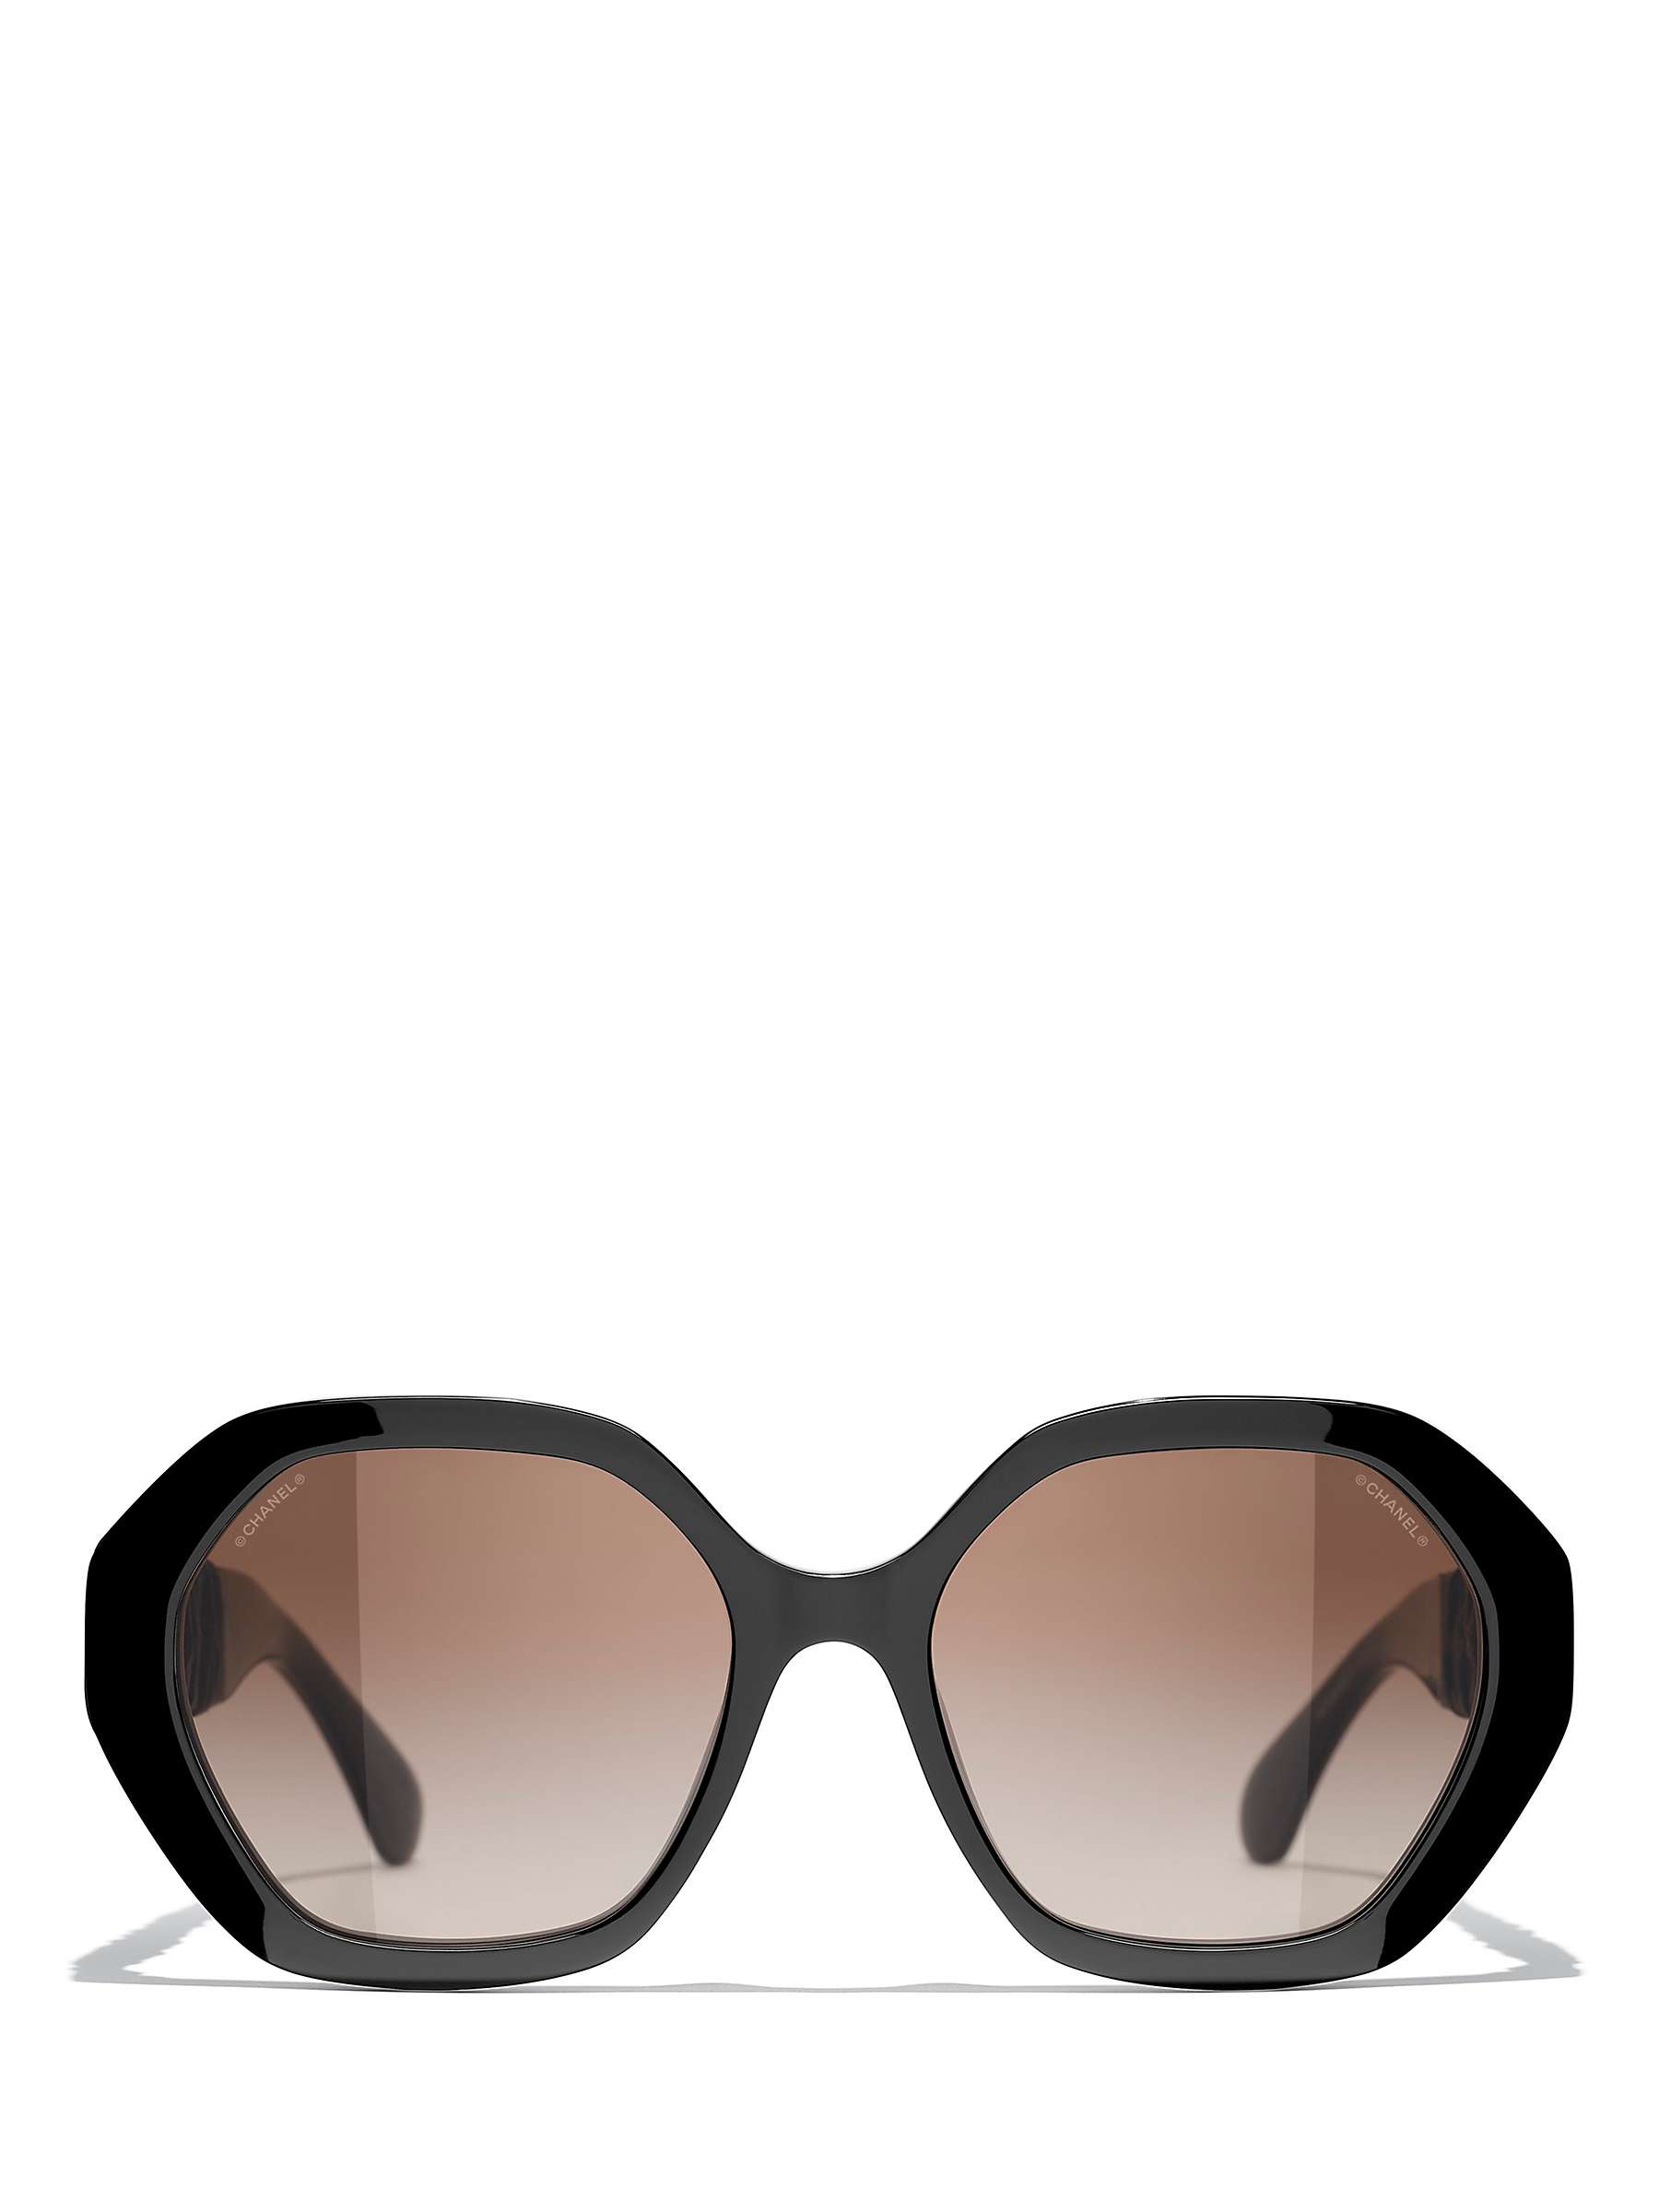 Buy CHANEL Irregular Sunglasses CH5475Q Shiny Black/Brown Gradient Online at johnlewis.com